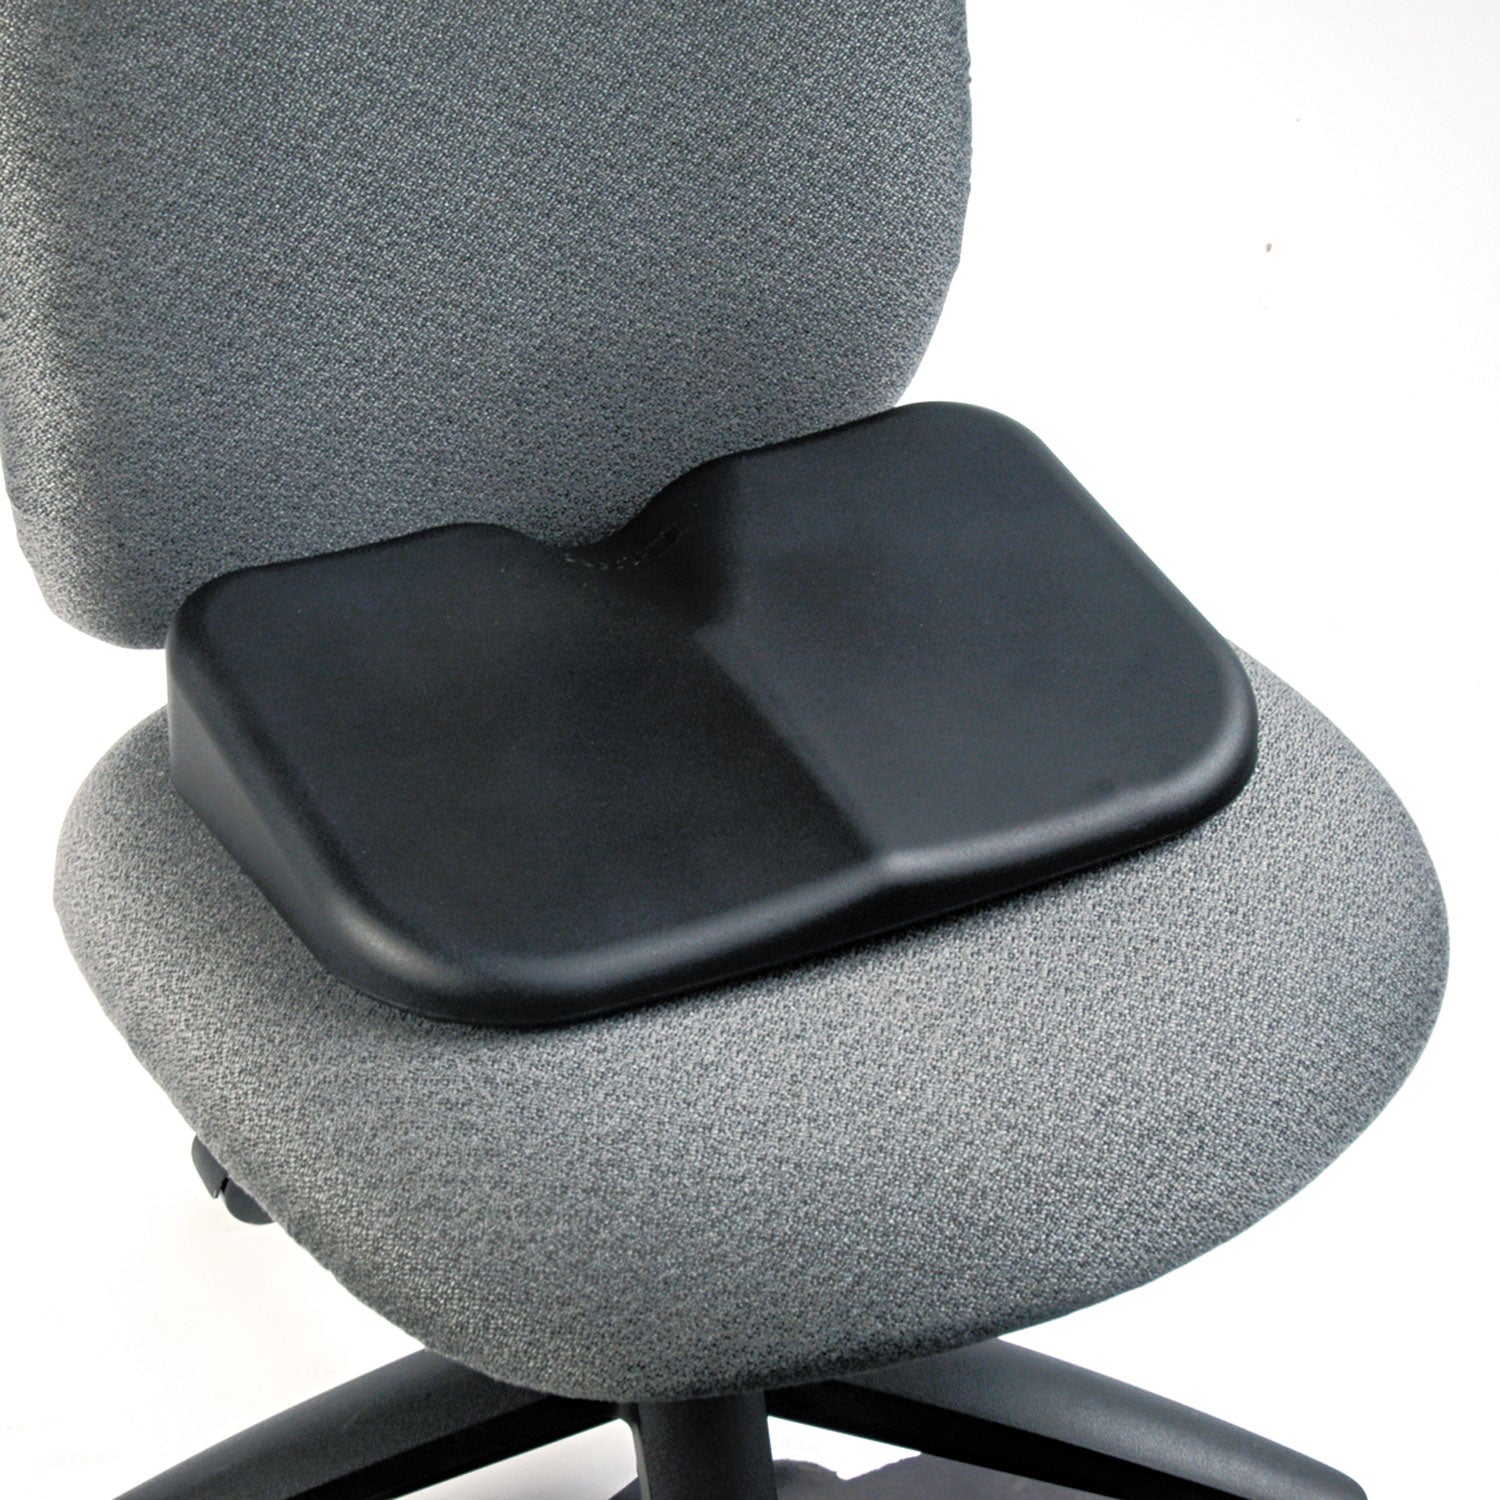 Seat Cushion, 15.5 x 10 x 3, Black - 